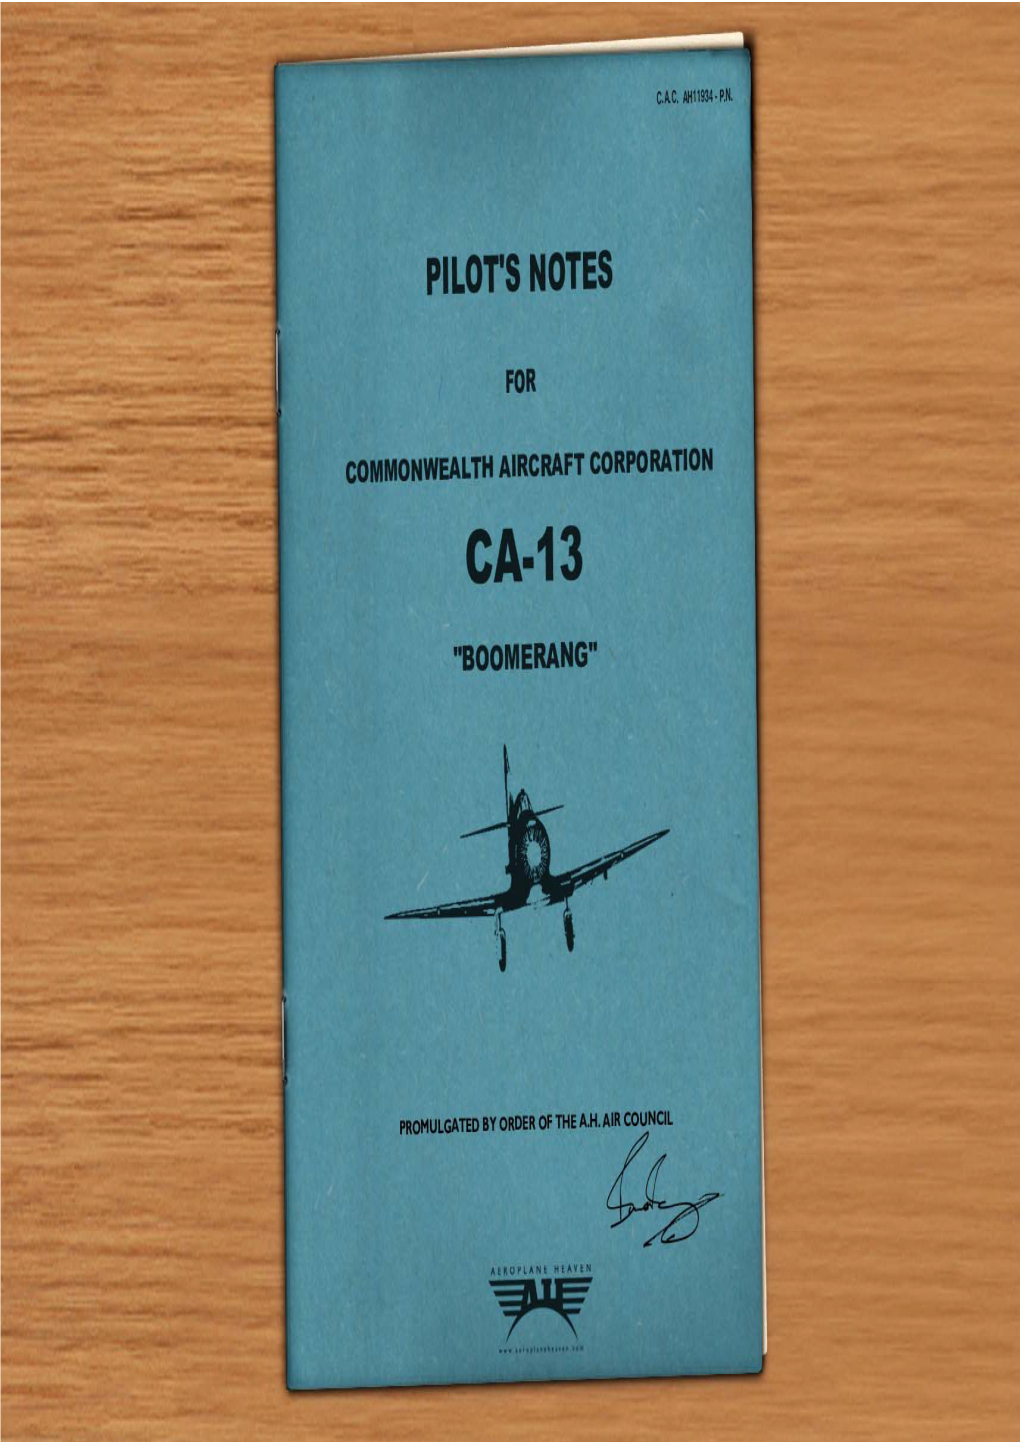 CA-13 “Boomerang” PILOT’S NOTES